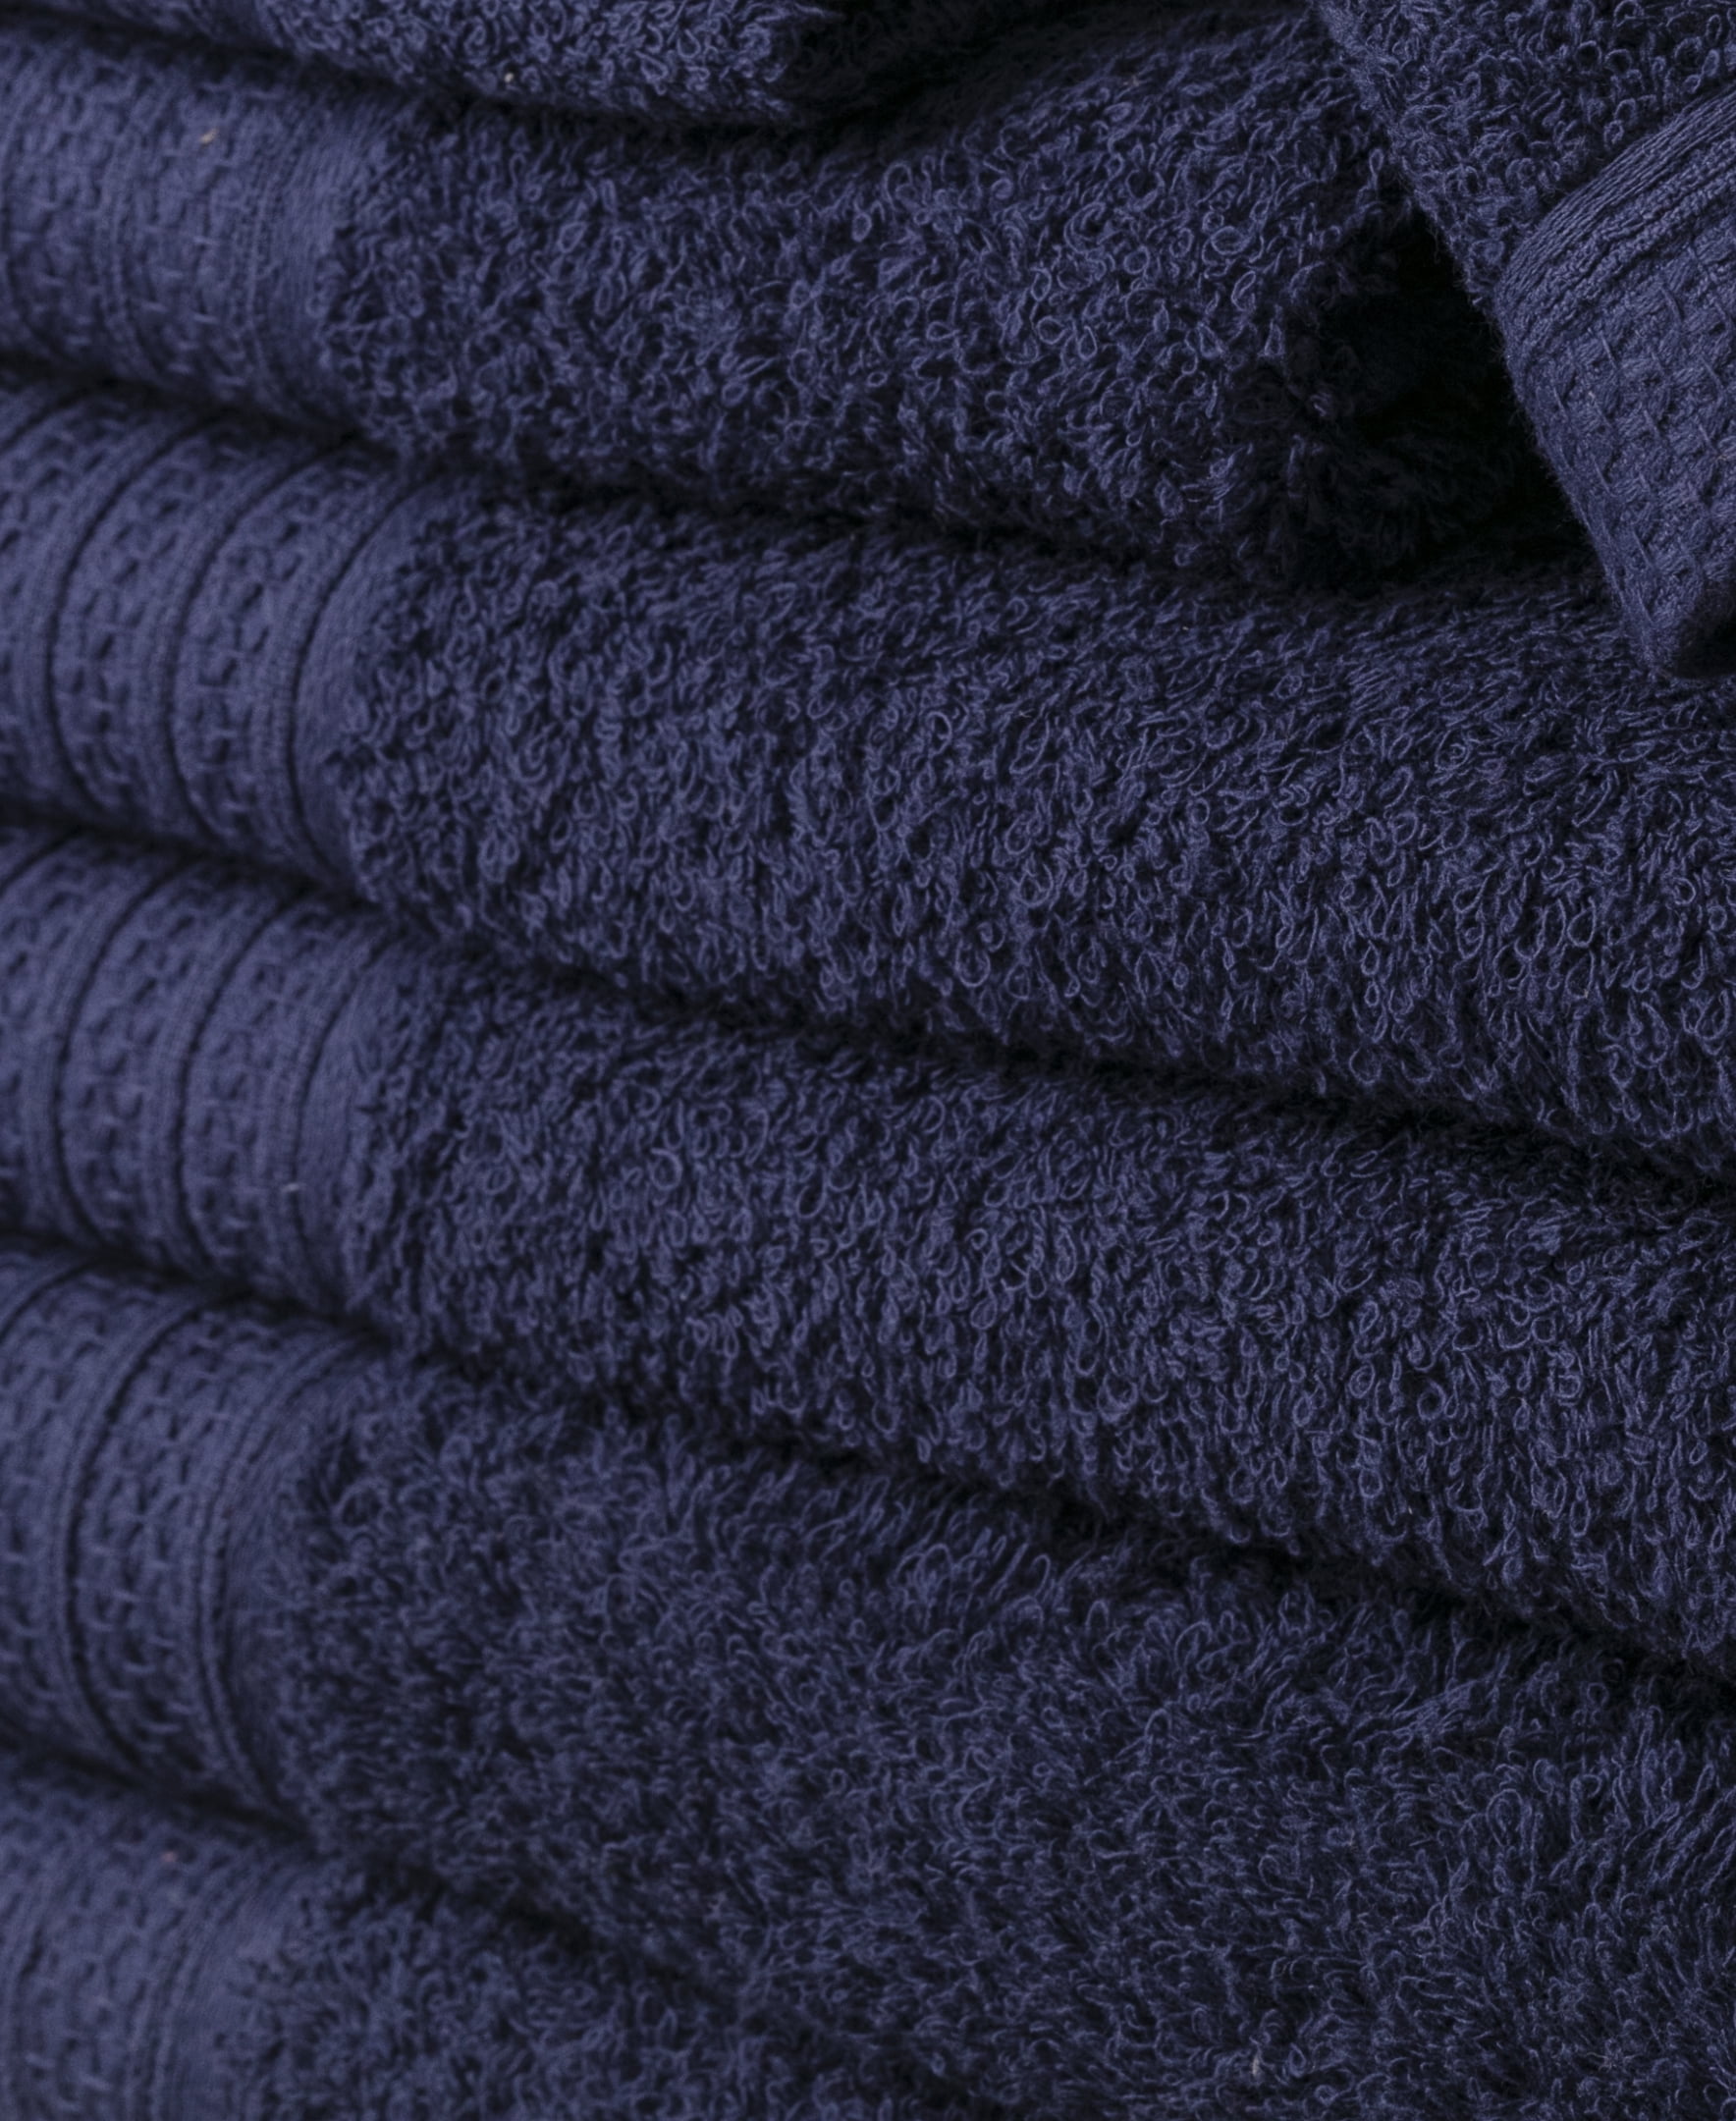 100-Percent Cotton Luxury 12-Piece Towel Set - image 3 of 3